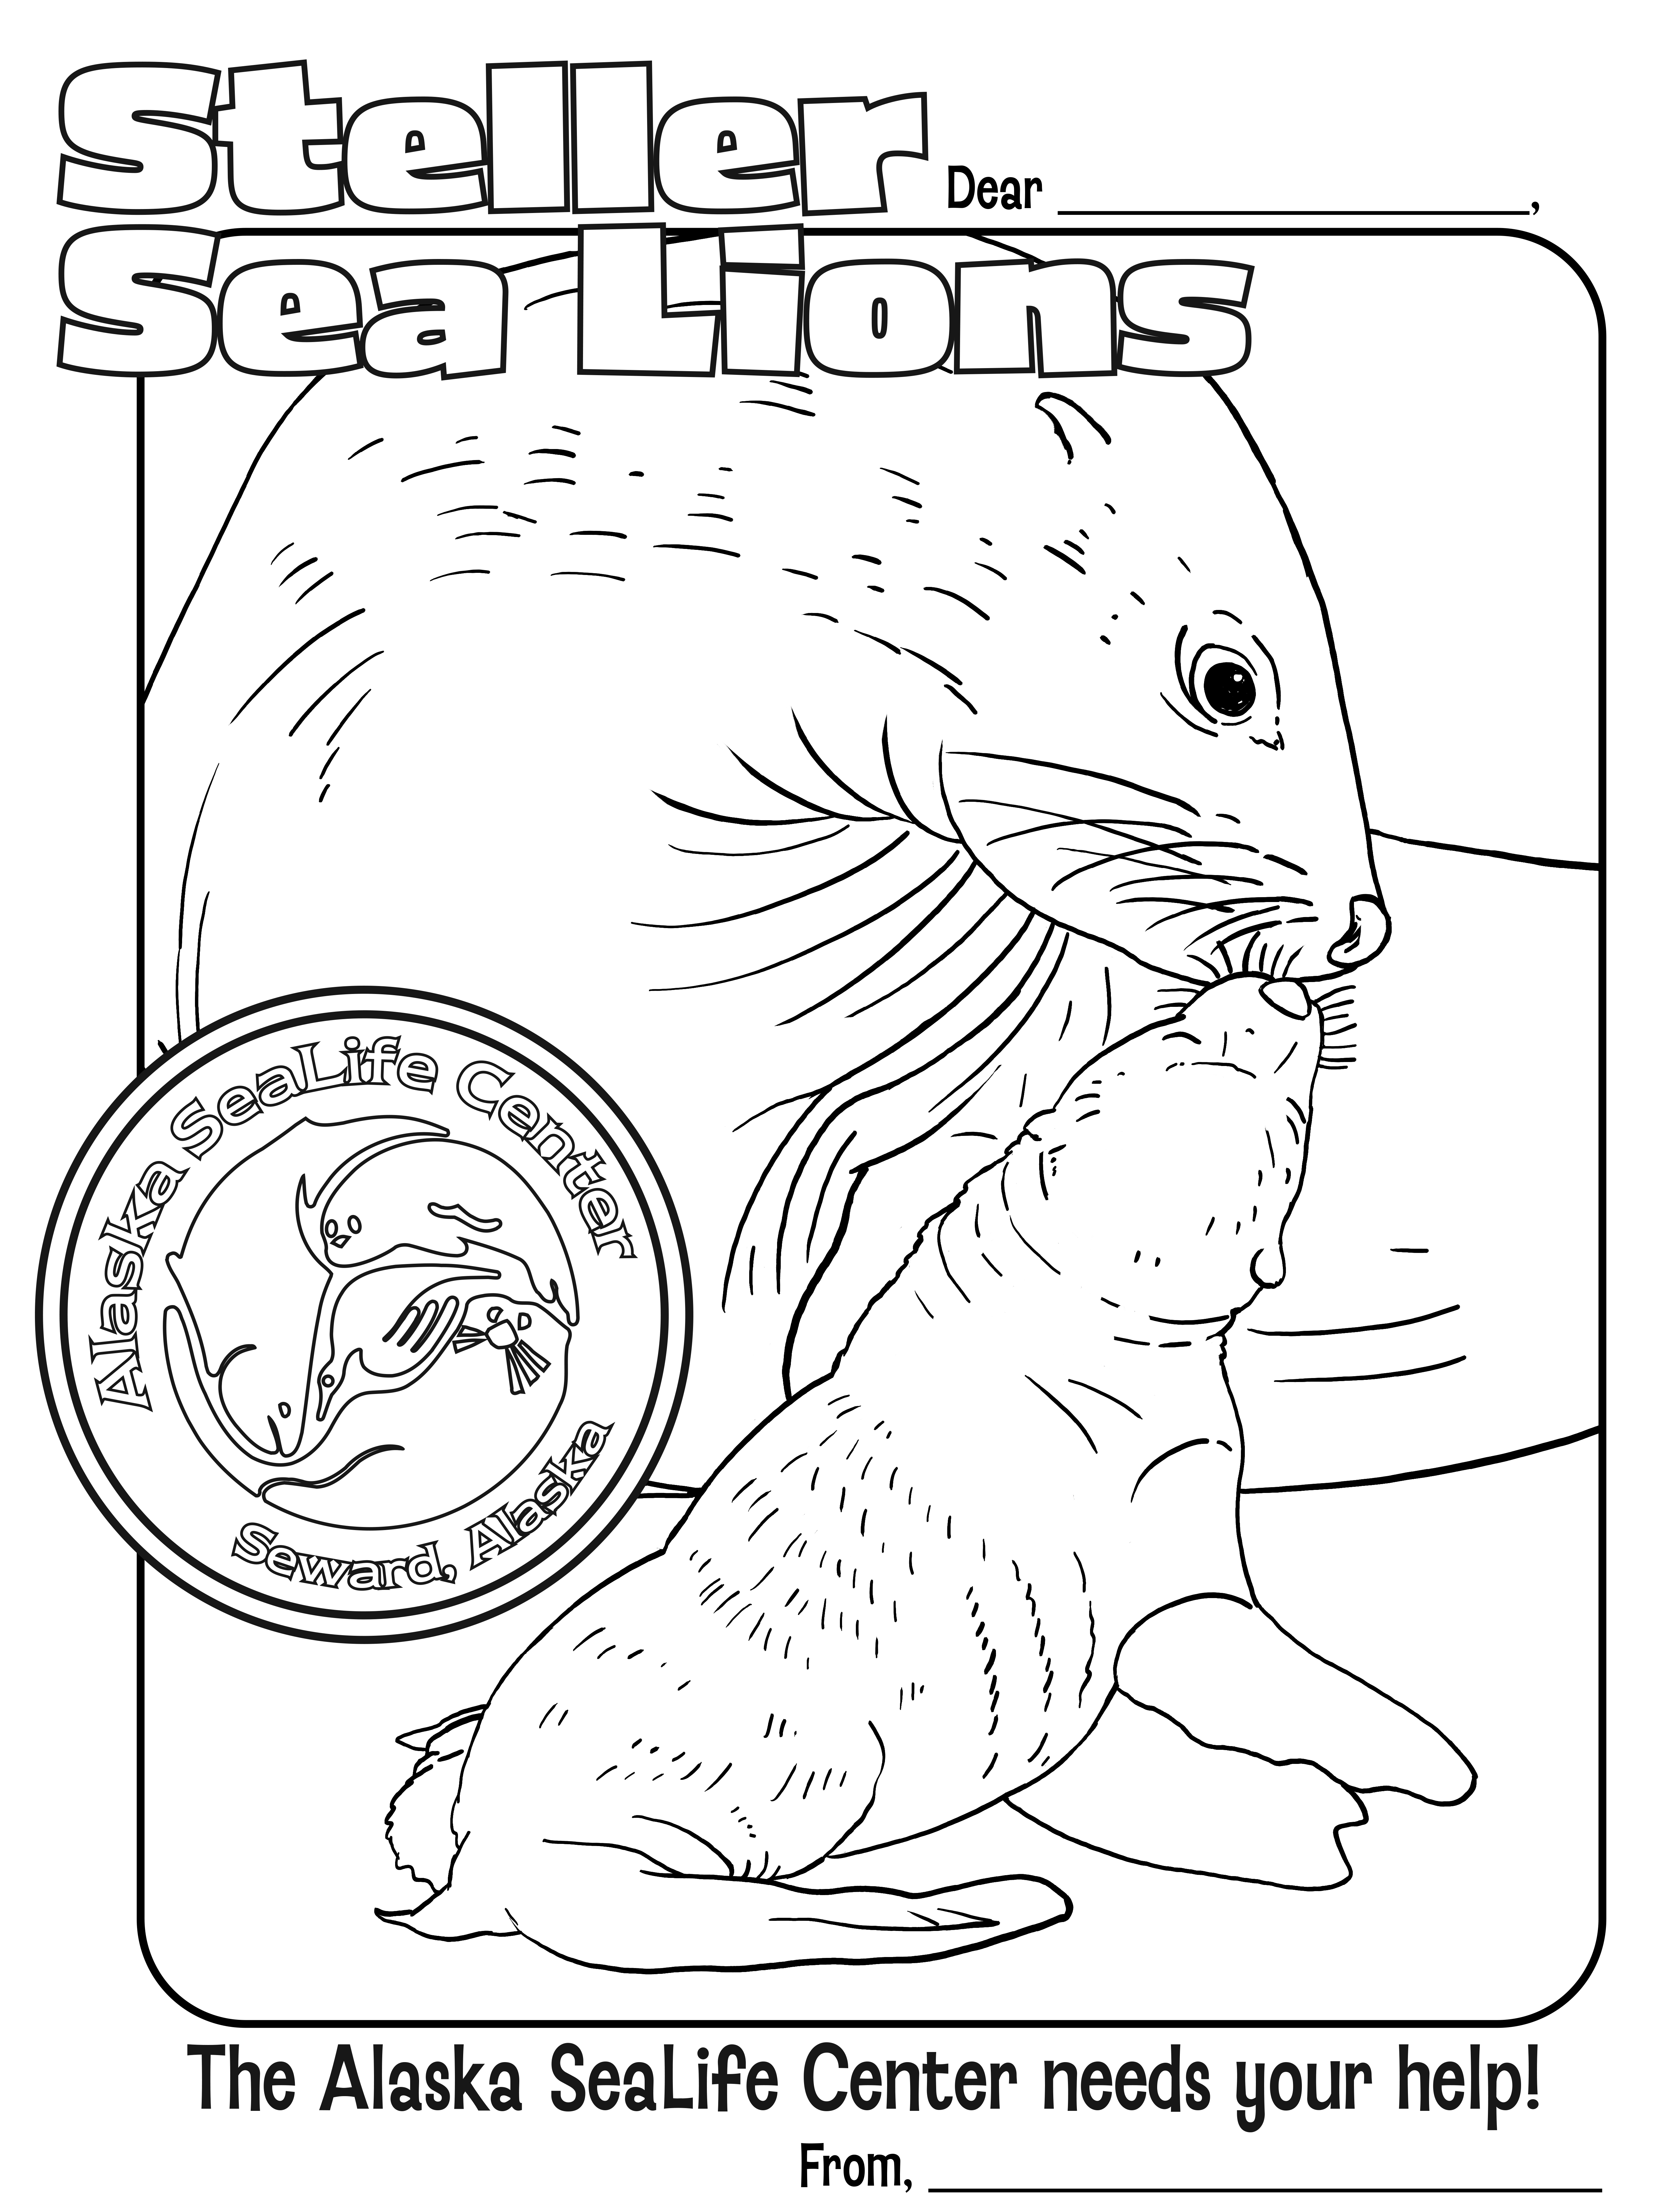 Coloring to save the alaska sealife center